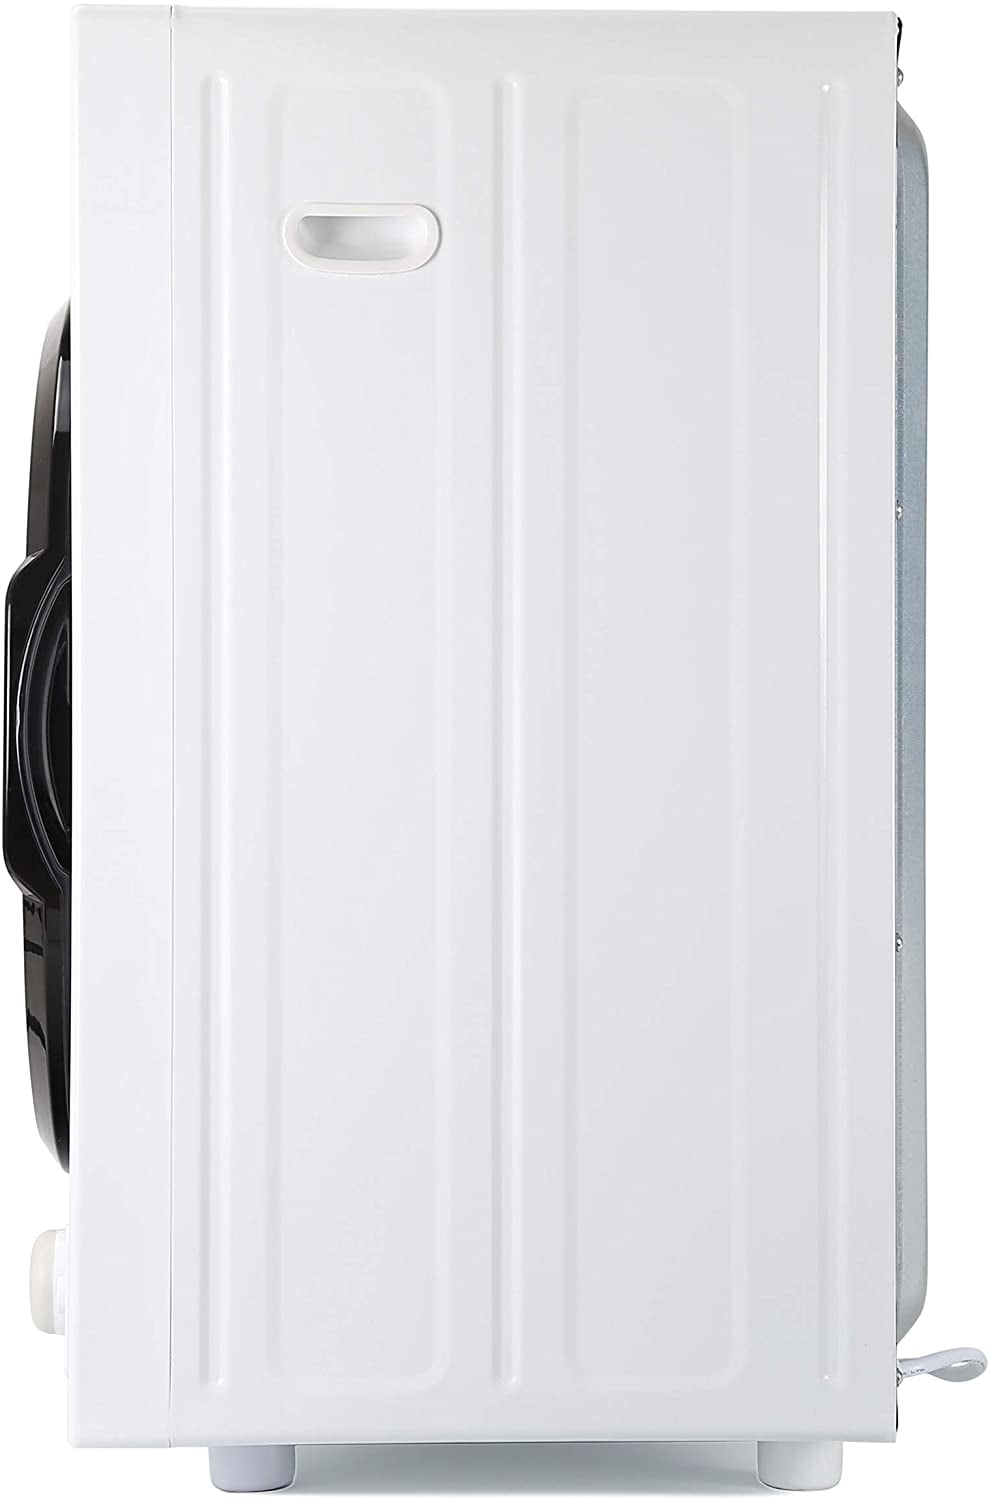 BLACK+DECKER Secadora de ropa compacta, 1.5 pies cúbicos. Secadora  eléctrica de 850 W, secadora portátil ventilada de 120 V con tambor de  acero